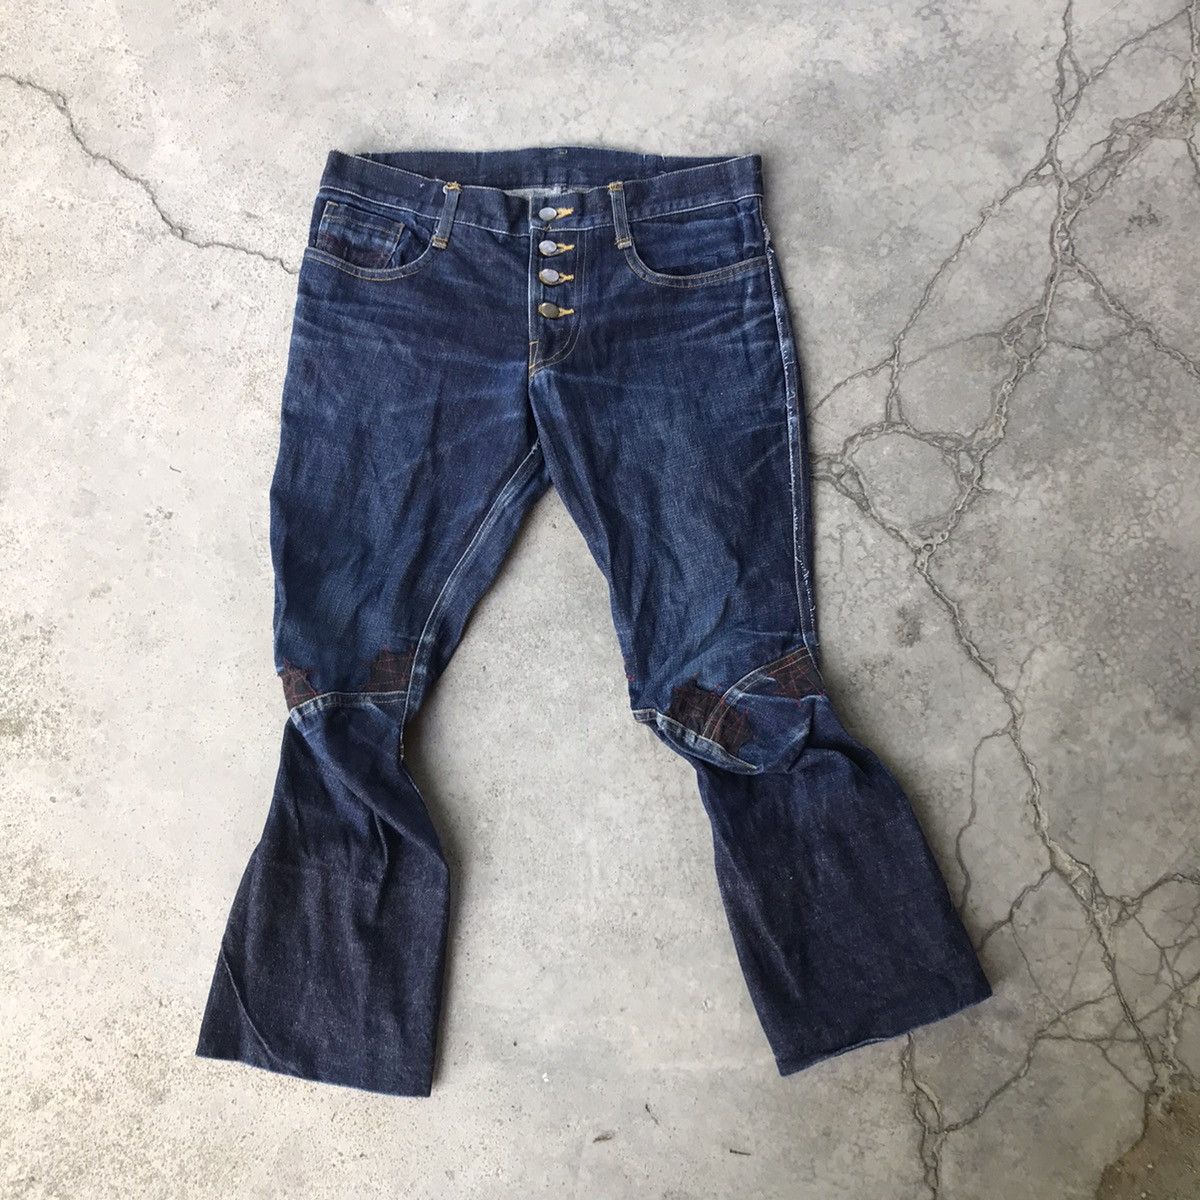 Rarechristopher Nemeth Knee Patched Jeans/bikers Jeans/size 